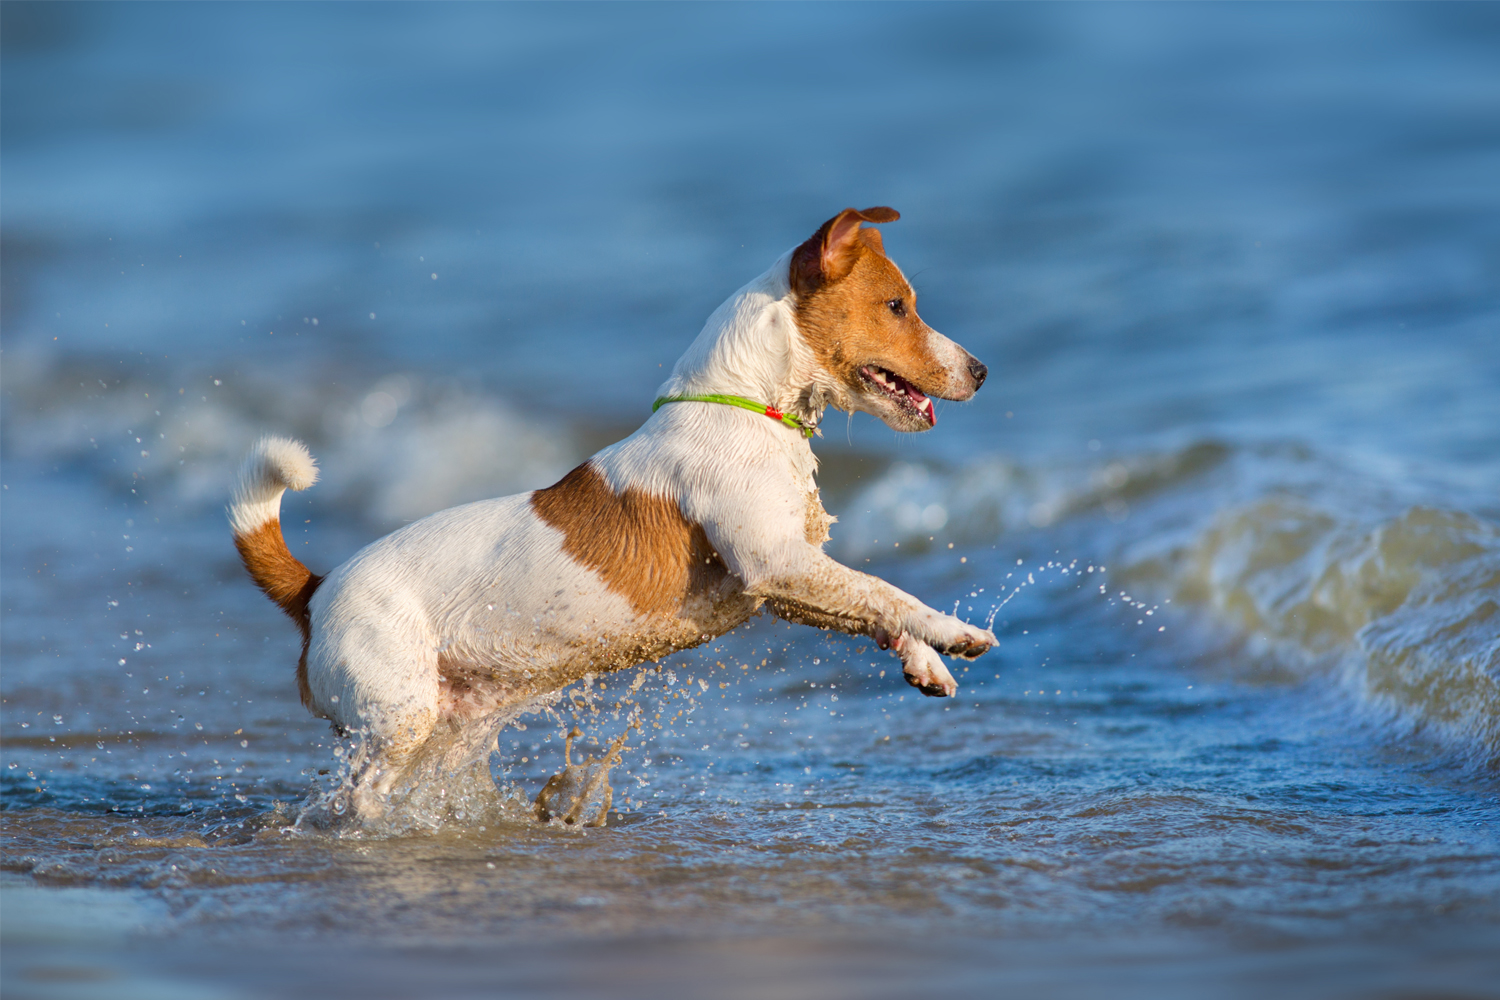 Playa para perros